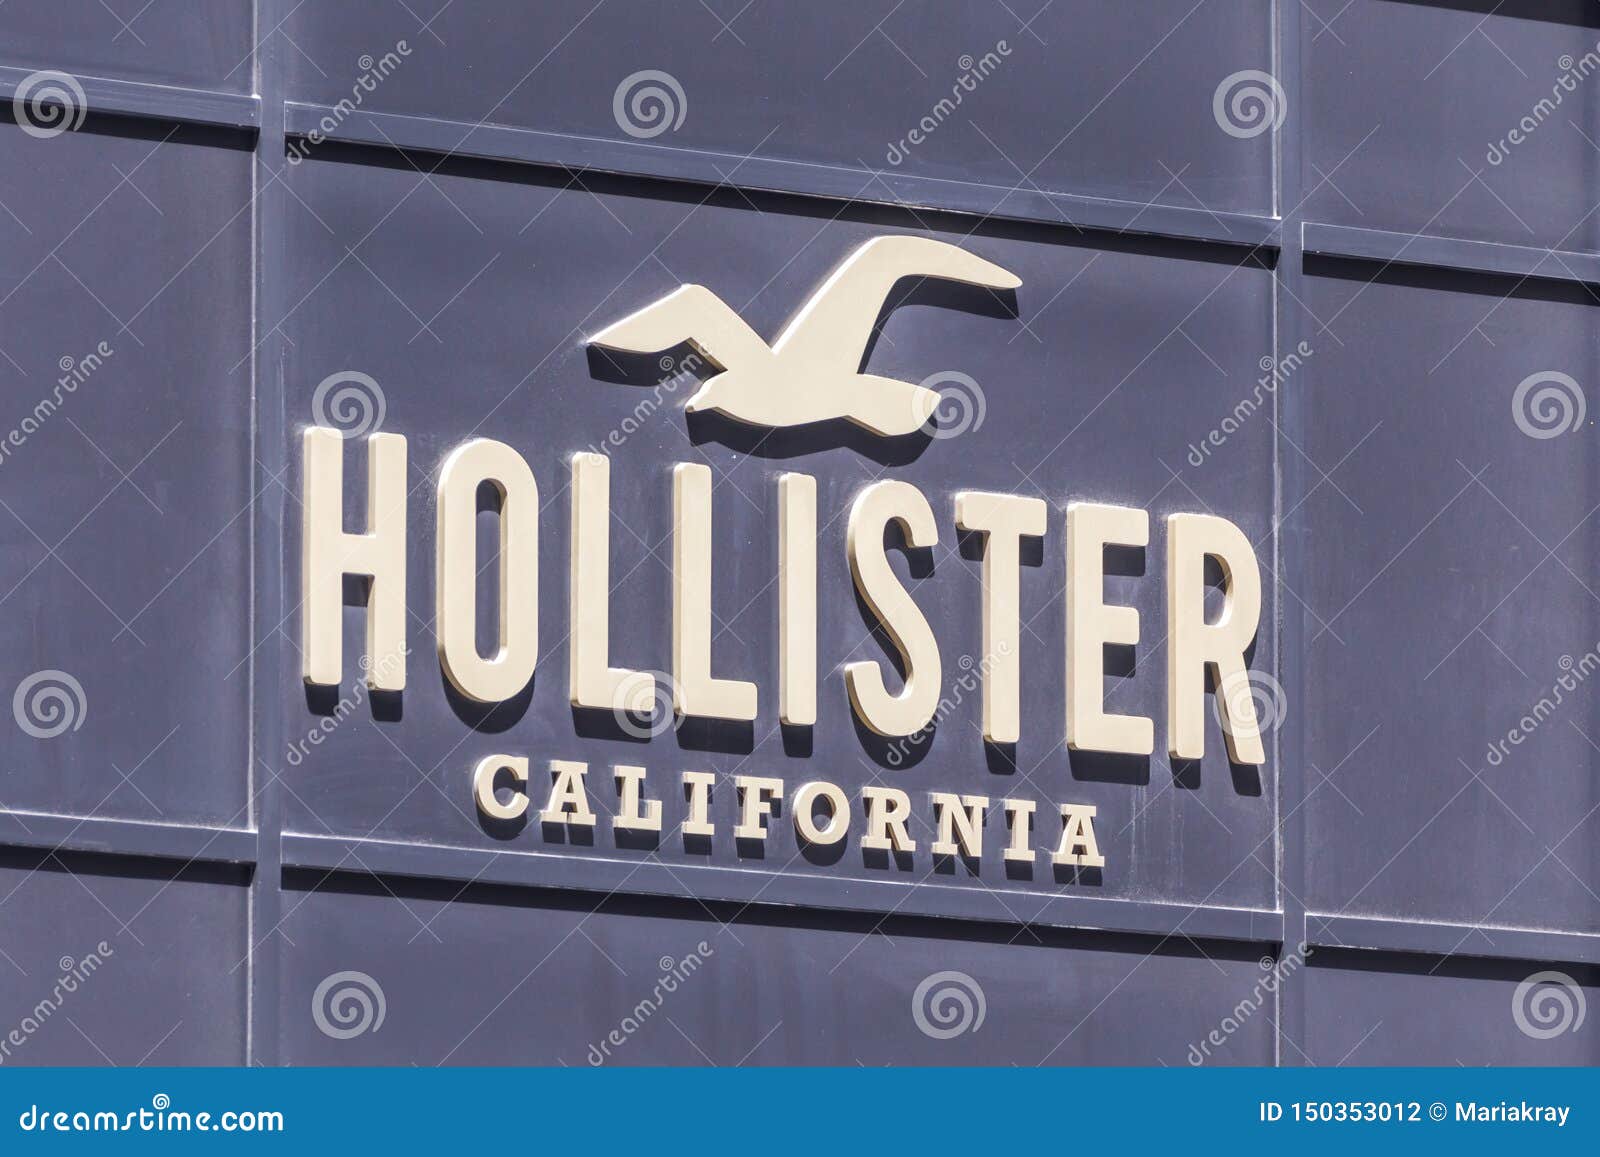 hollister california clothing